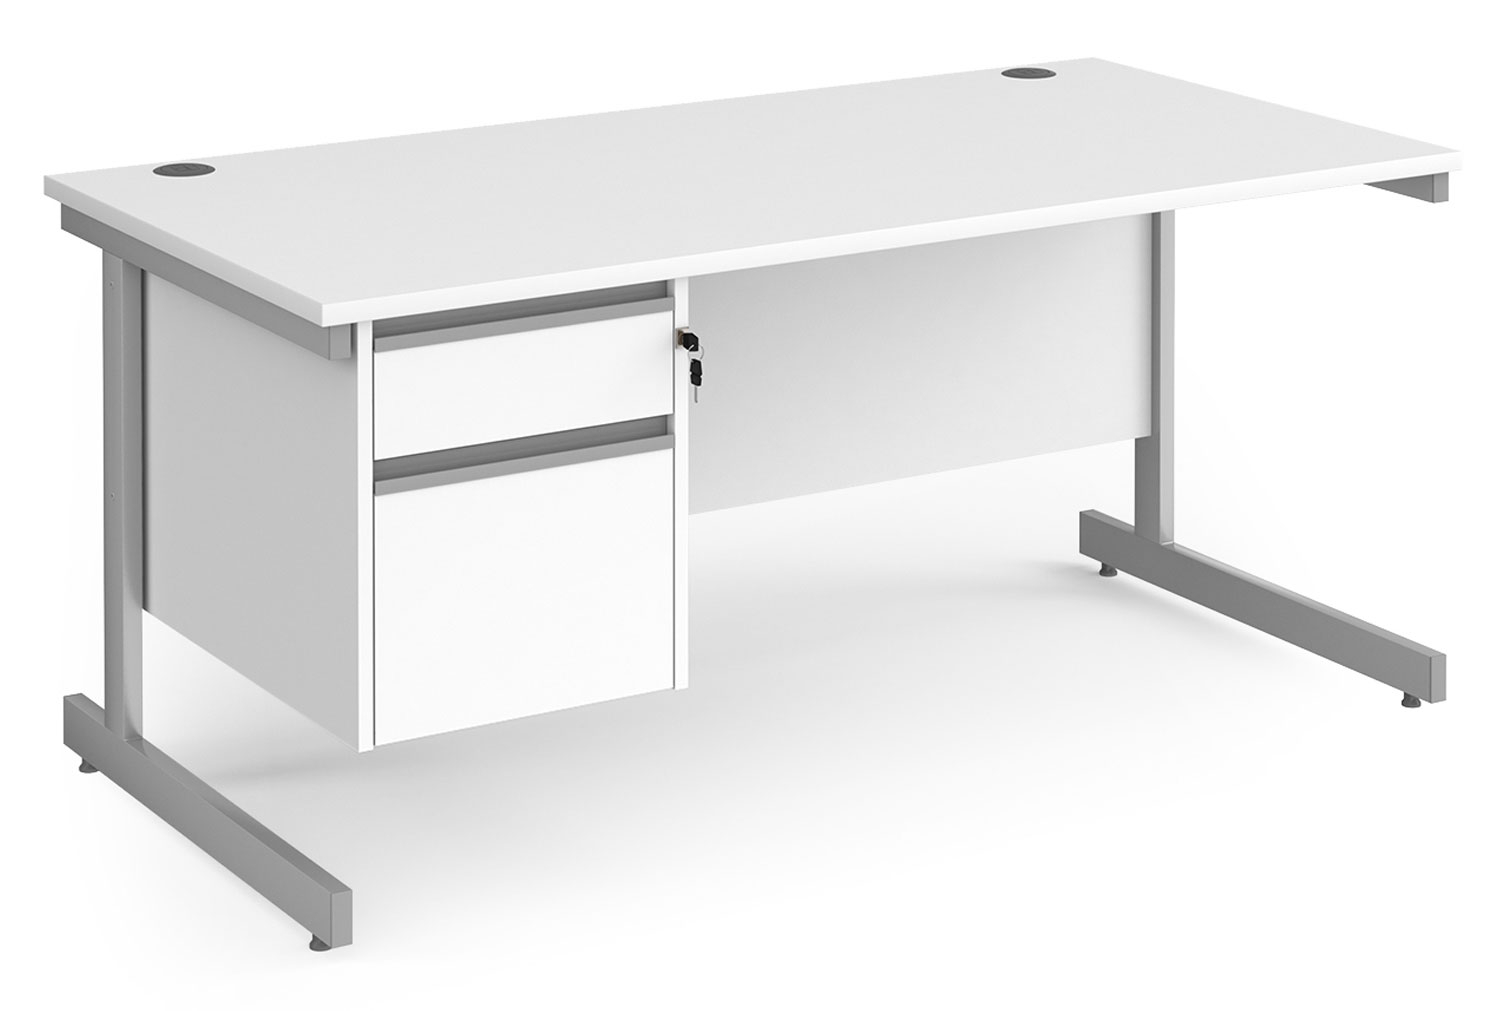 Value Line Classic+ Rectangular C-Leg Office Desk 2 Drawers (Silver Leg), 160wx80dx73h (cm), White